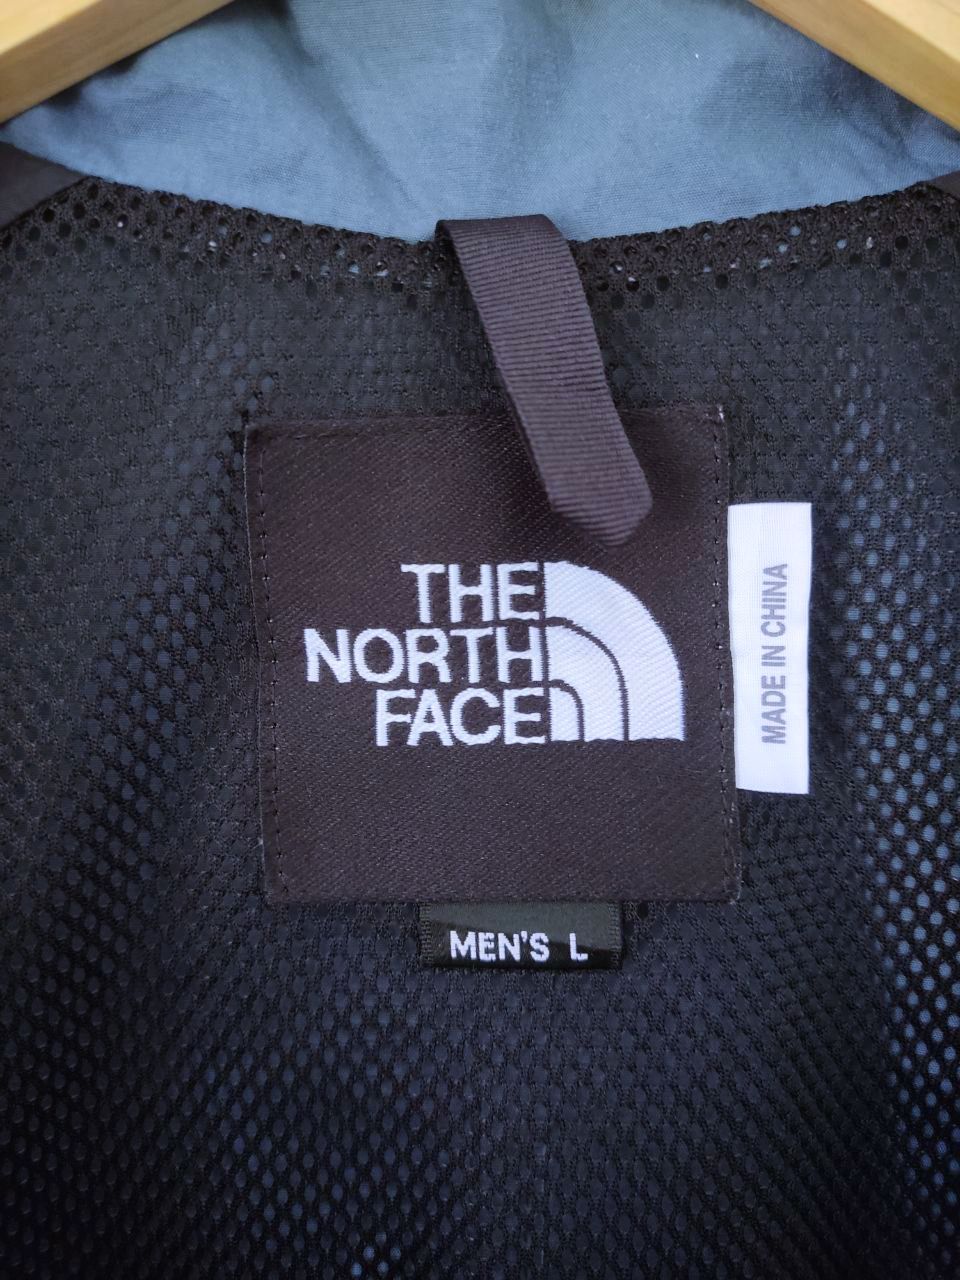 The North Face Nylon Vest Jacket - 6